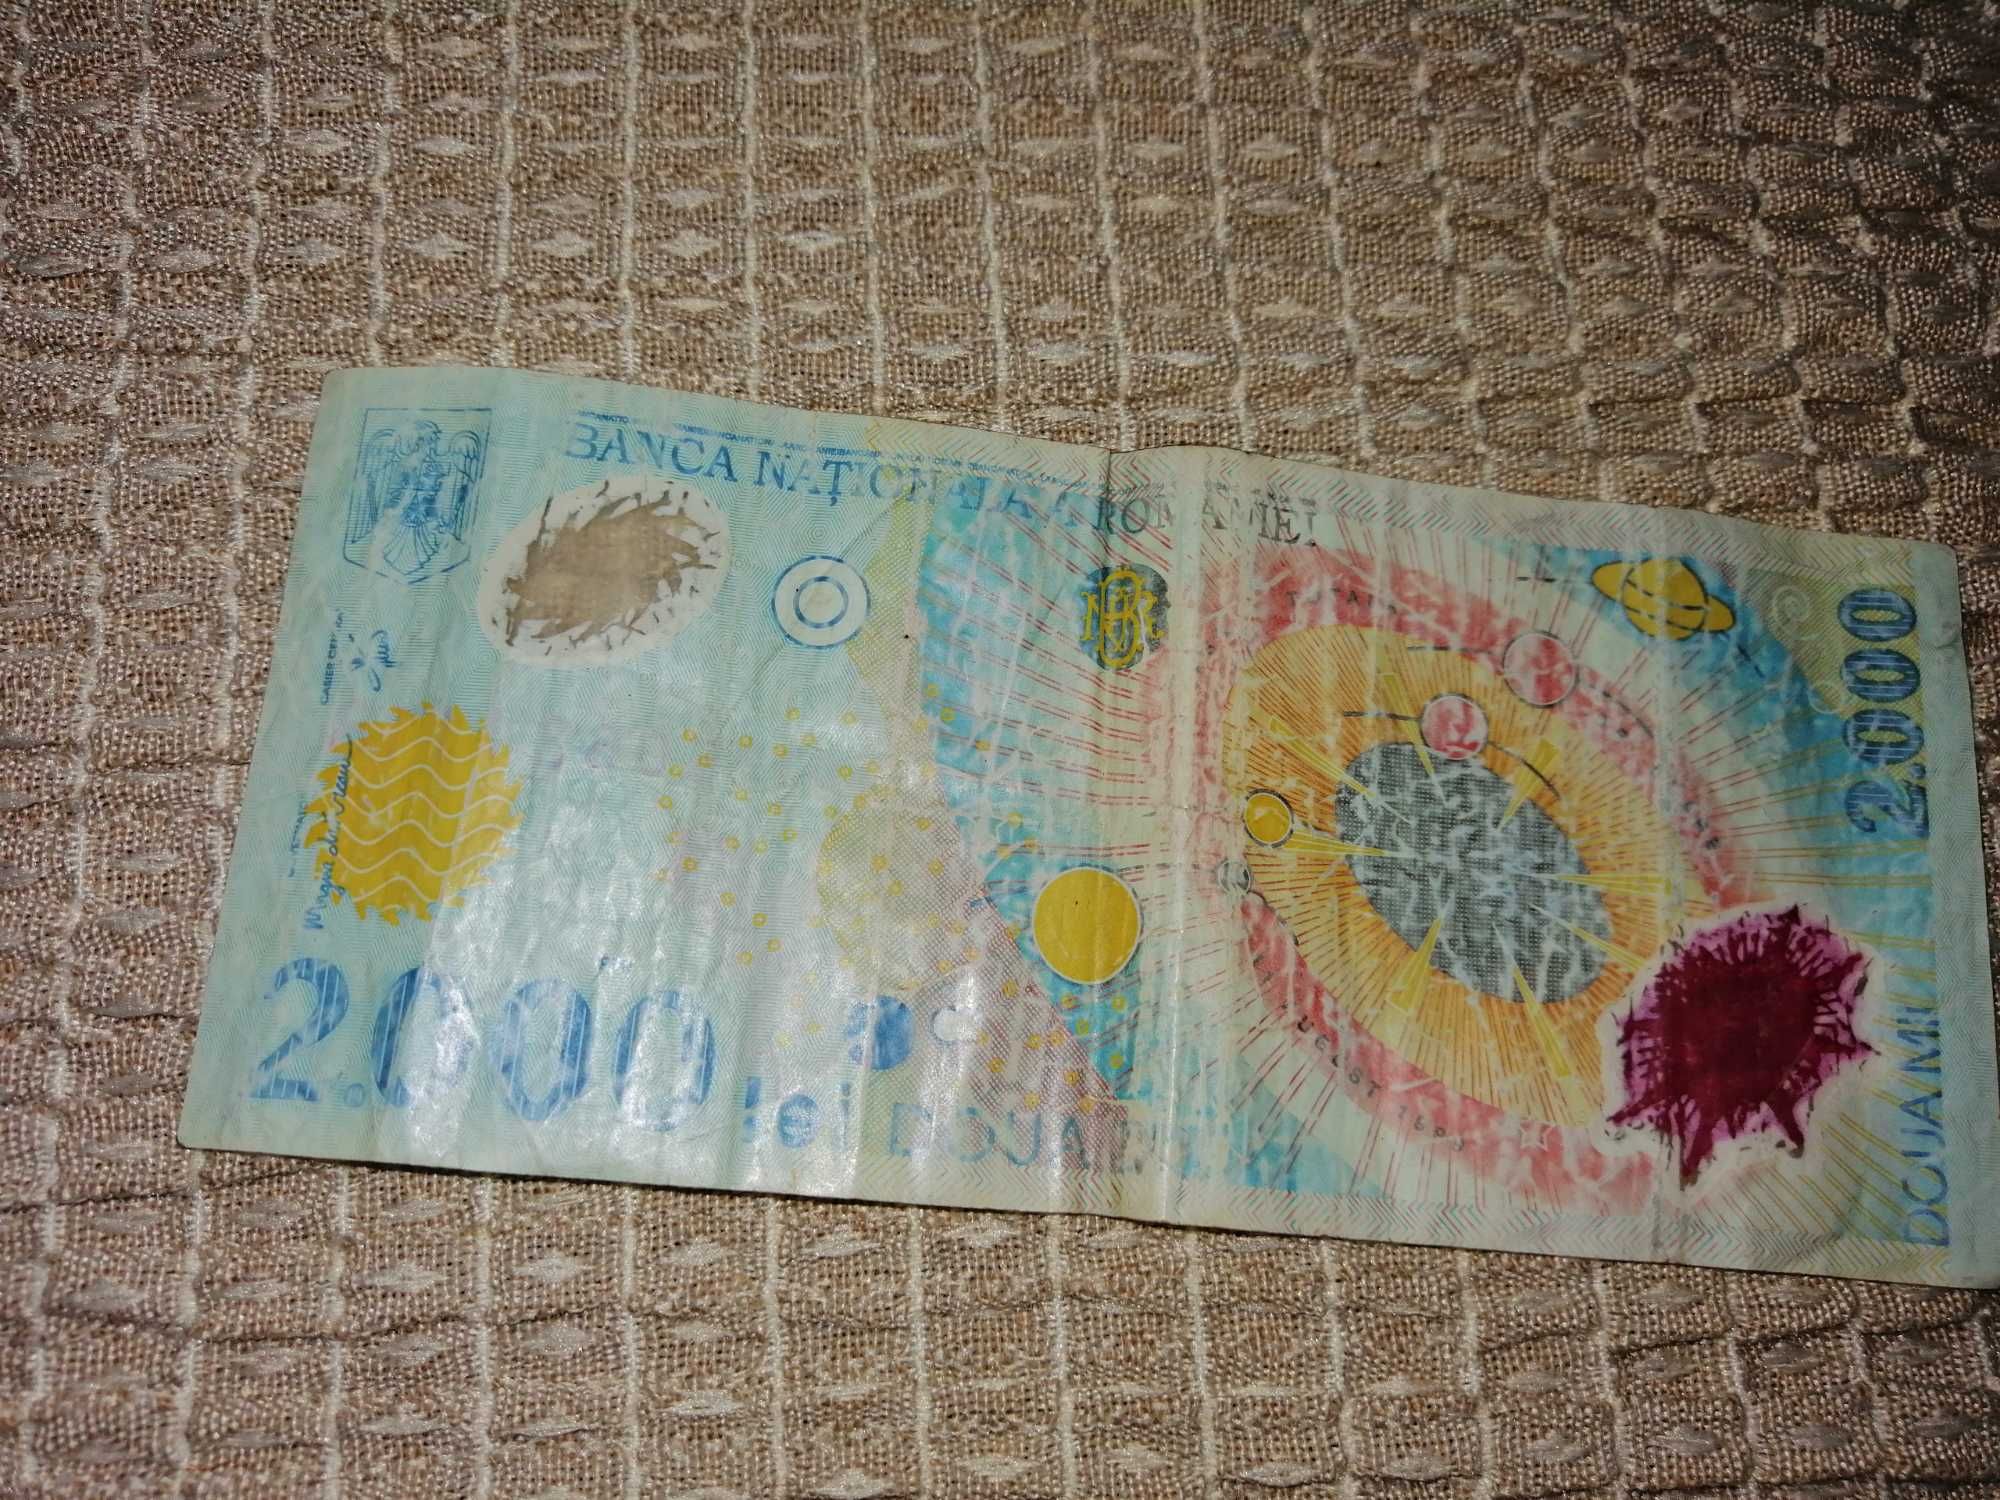 Bancnote de 2000 lei cu eclipsa.